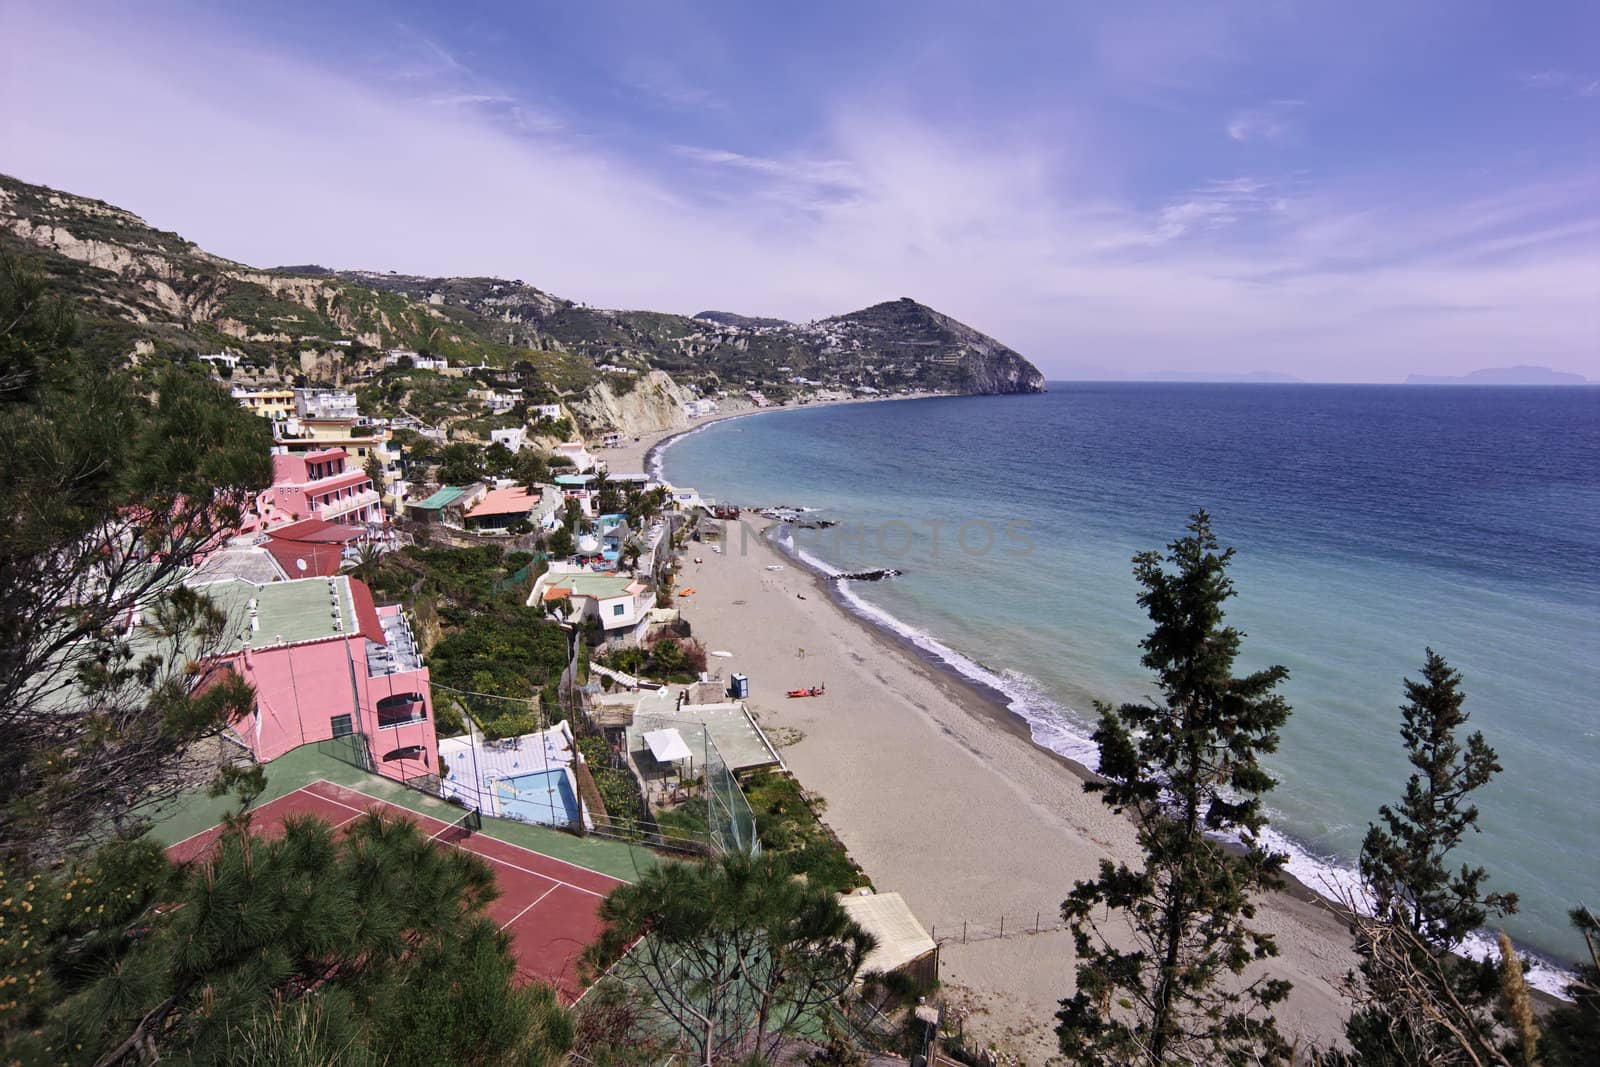 ITALY, Campania, Ischia island, S.Angelo, view of S:Angelo beach